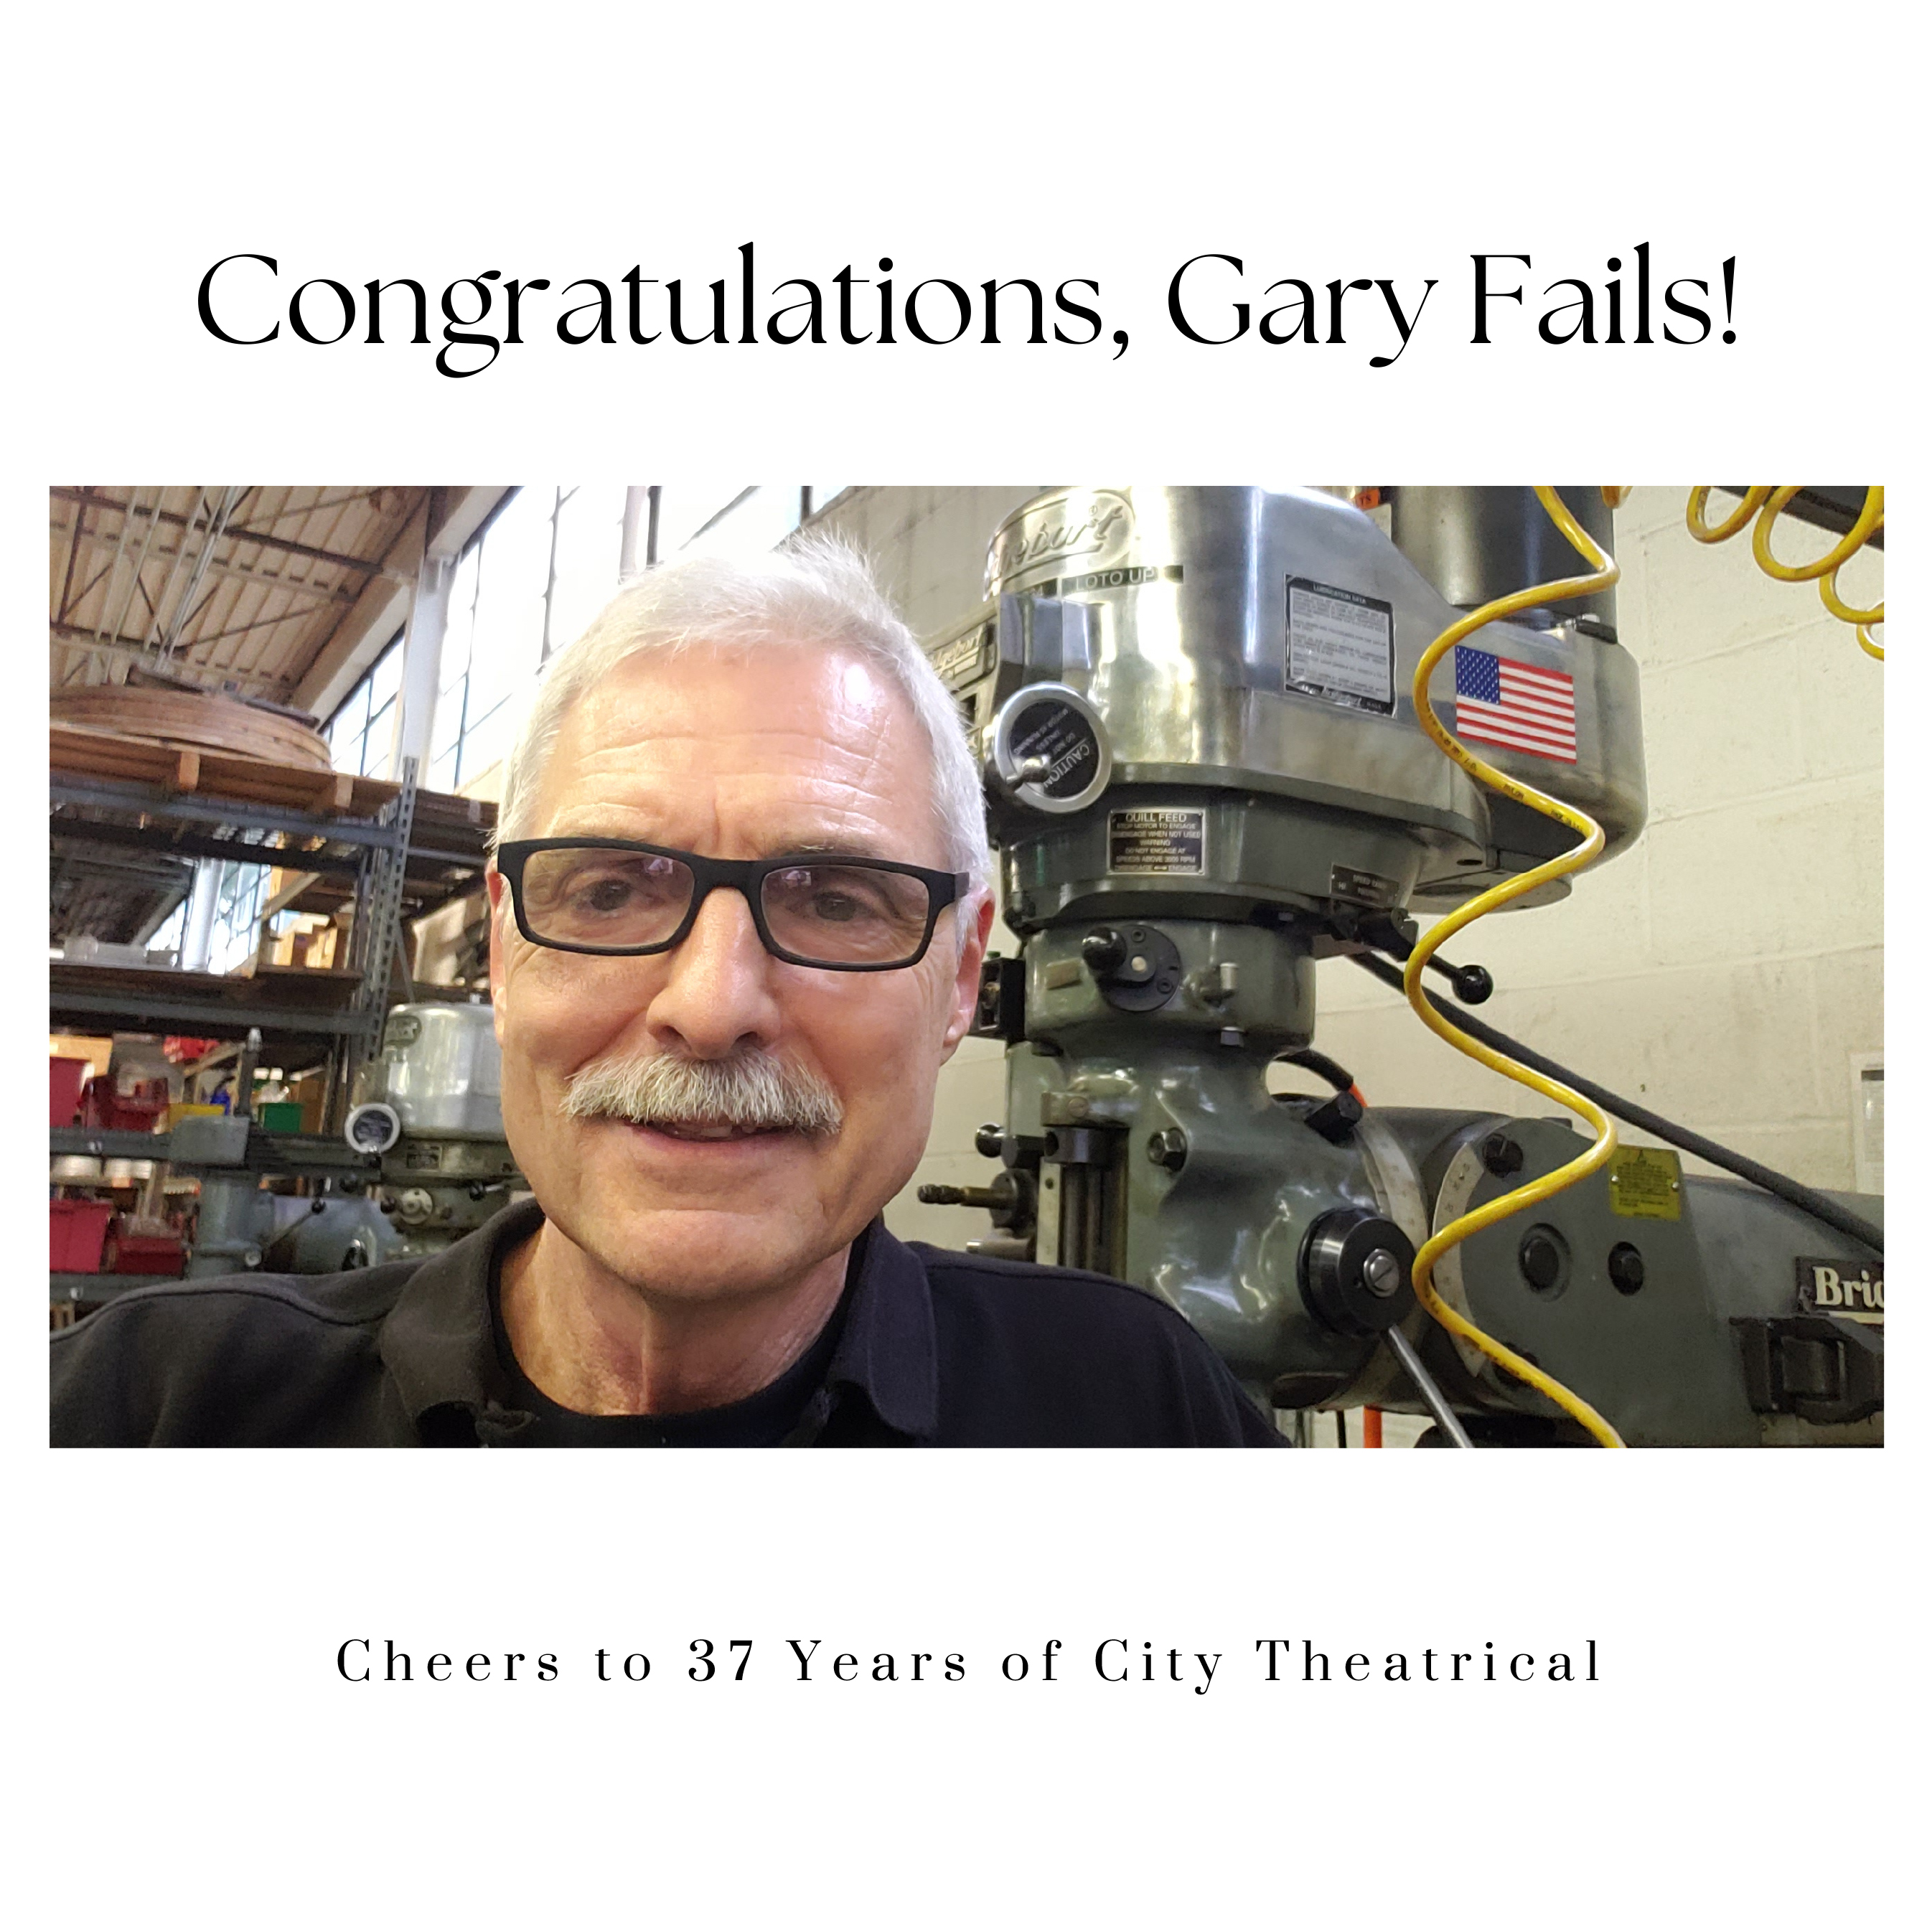 Gary Fails retirement congrats